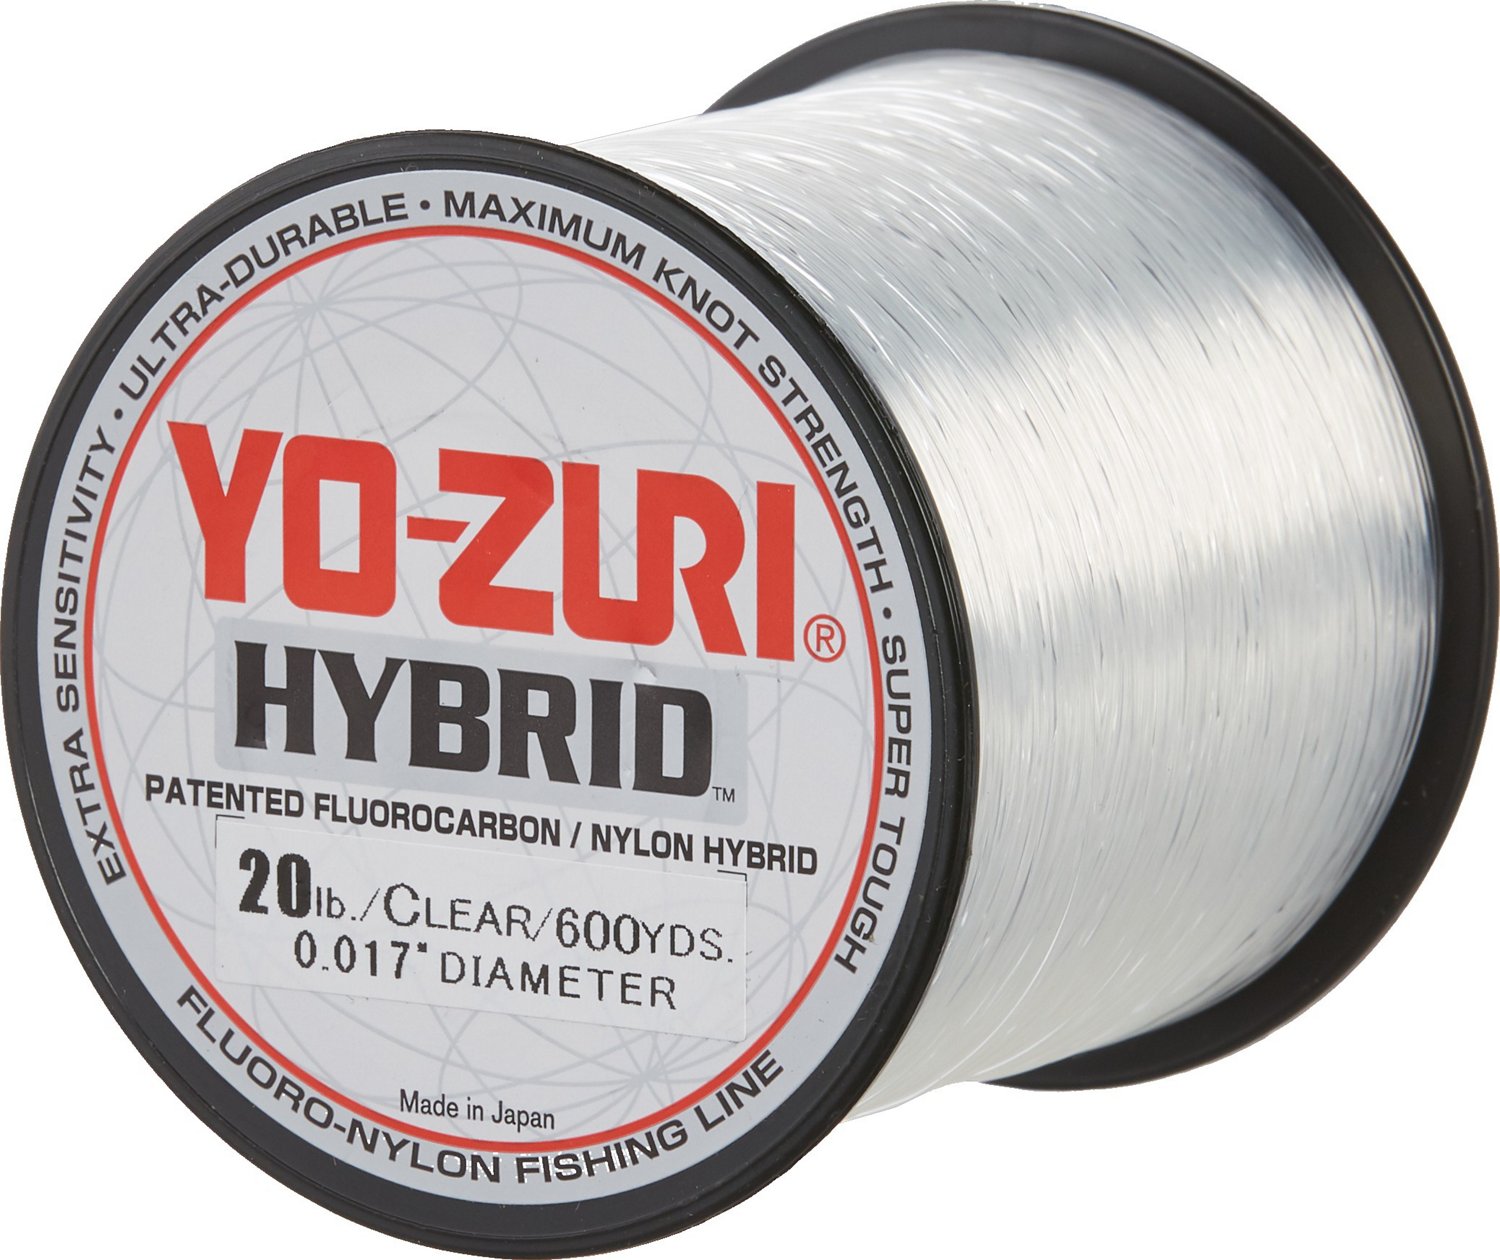 Yo-Zuri Hybrid Line 600 yds Co-Polymer Fishing Line